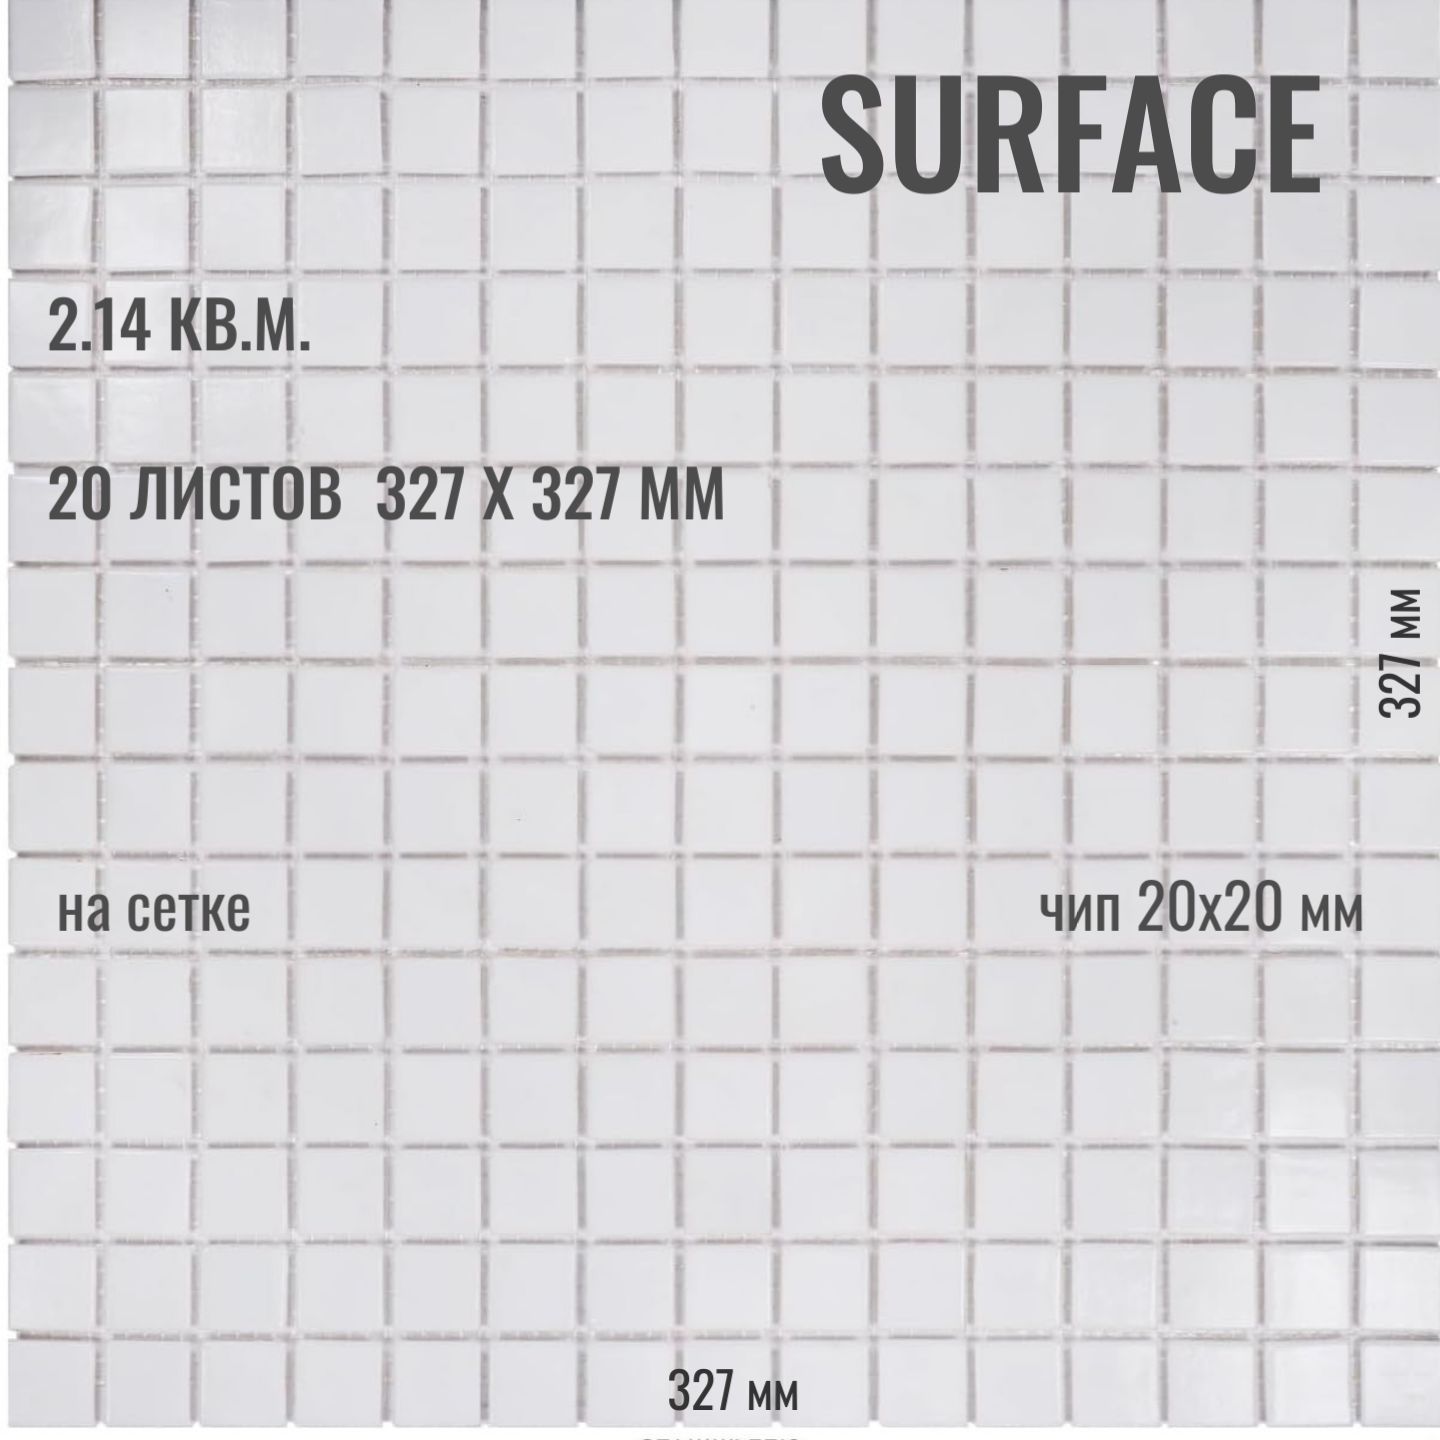 ПлиткаМозаикаSurfaceстекляннаябелая(уп.20шт)/насетке327х327мм/размерквадратика20x20x4мм/толщина4ммУцененныйтовар